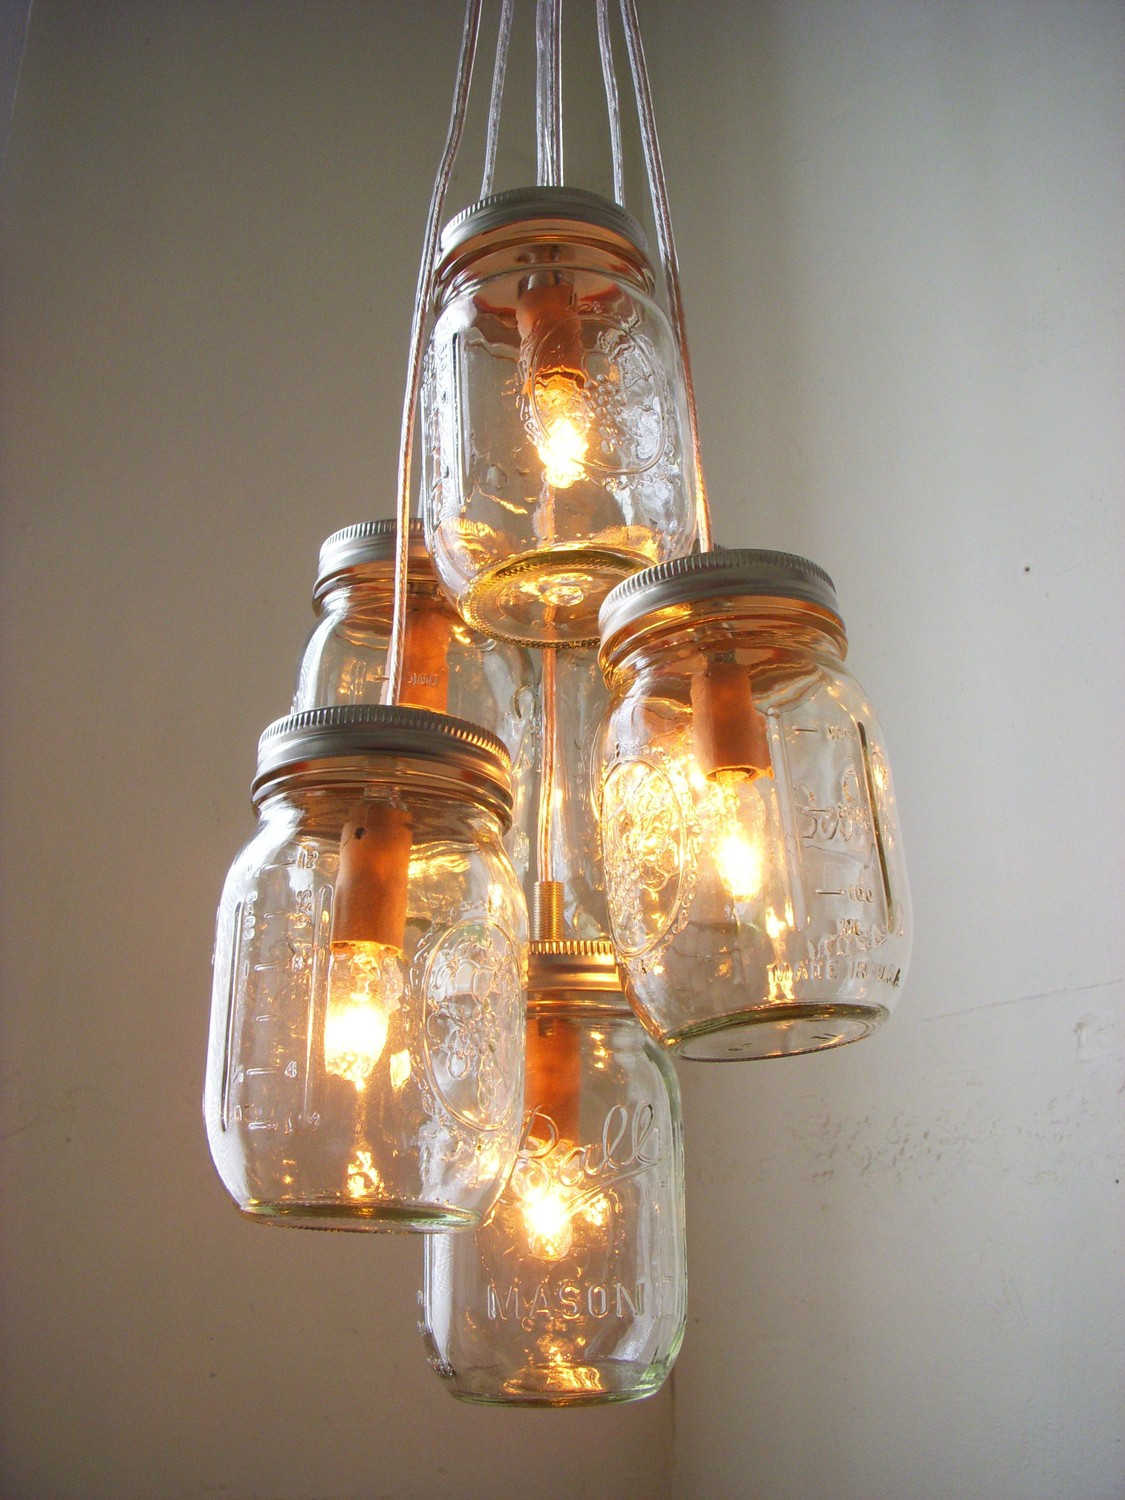 Best ideas about Mason Jar Pendant Light DIY
. Save or Pin Mason Jar Chandelier Now.